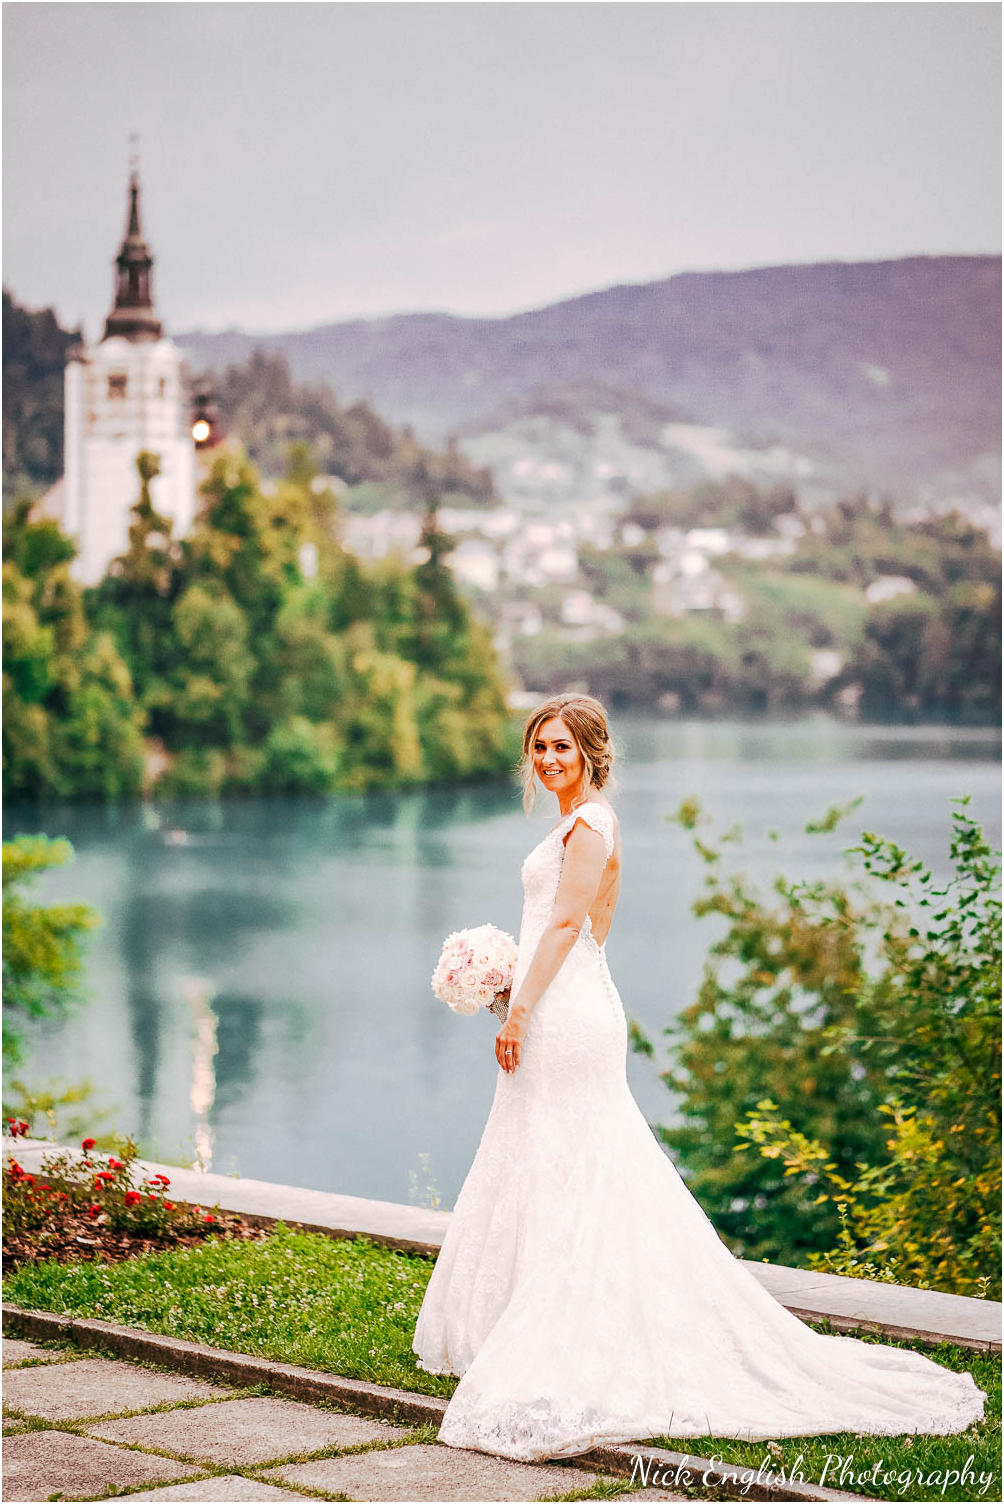 Destination_Wedding_Photographer_Slovenia_Nick_English_Photography-91.jpg